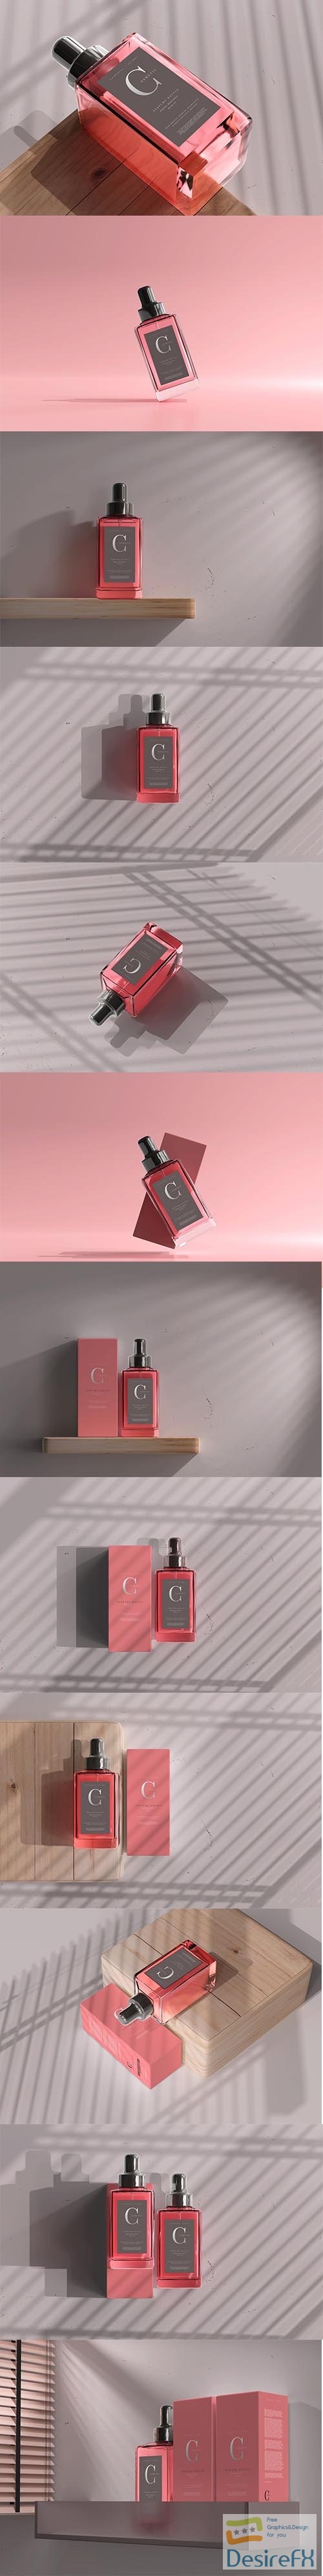 CreativeMarket - Square Perfume Bottle with Box Mockup 6056066